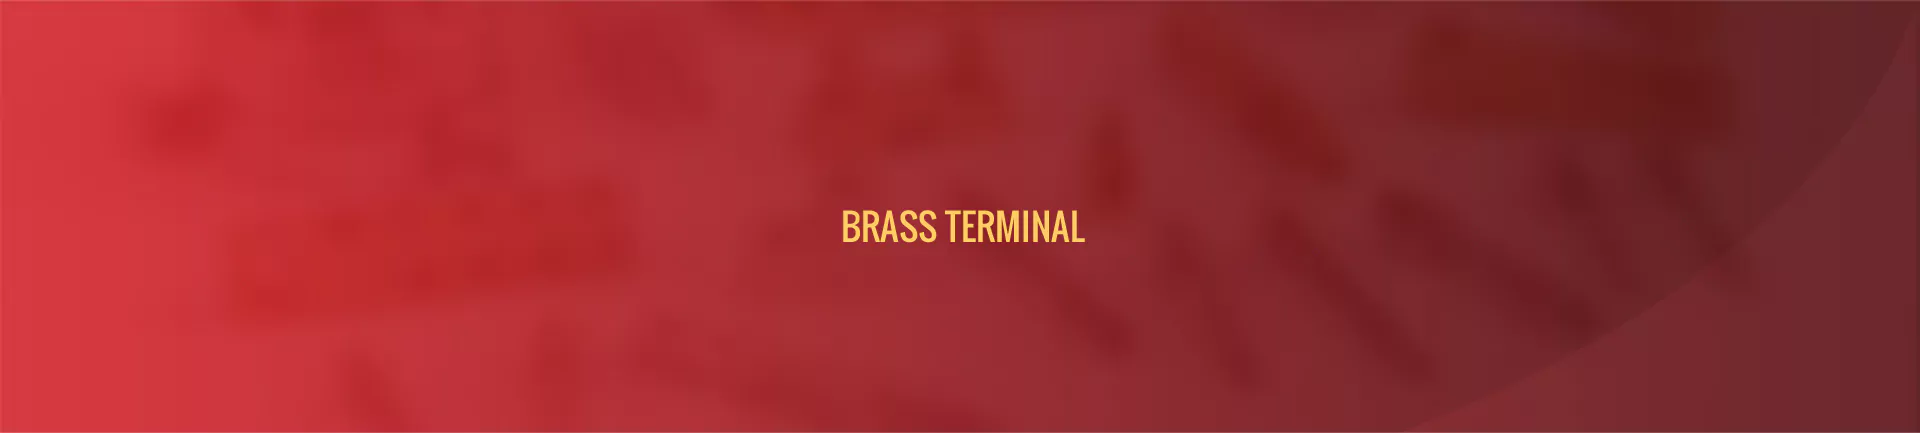 brass-terminals-banner